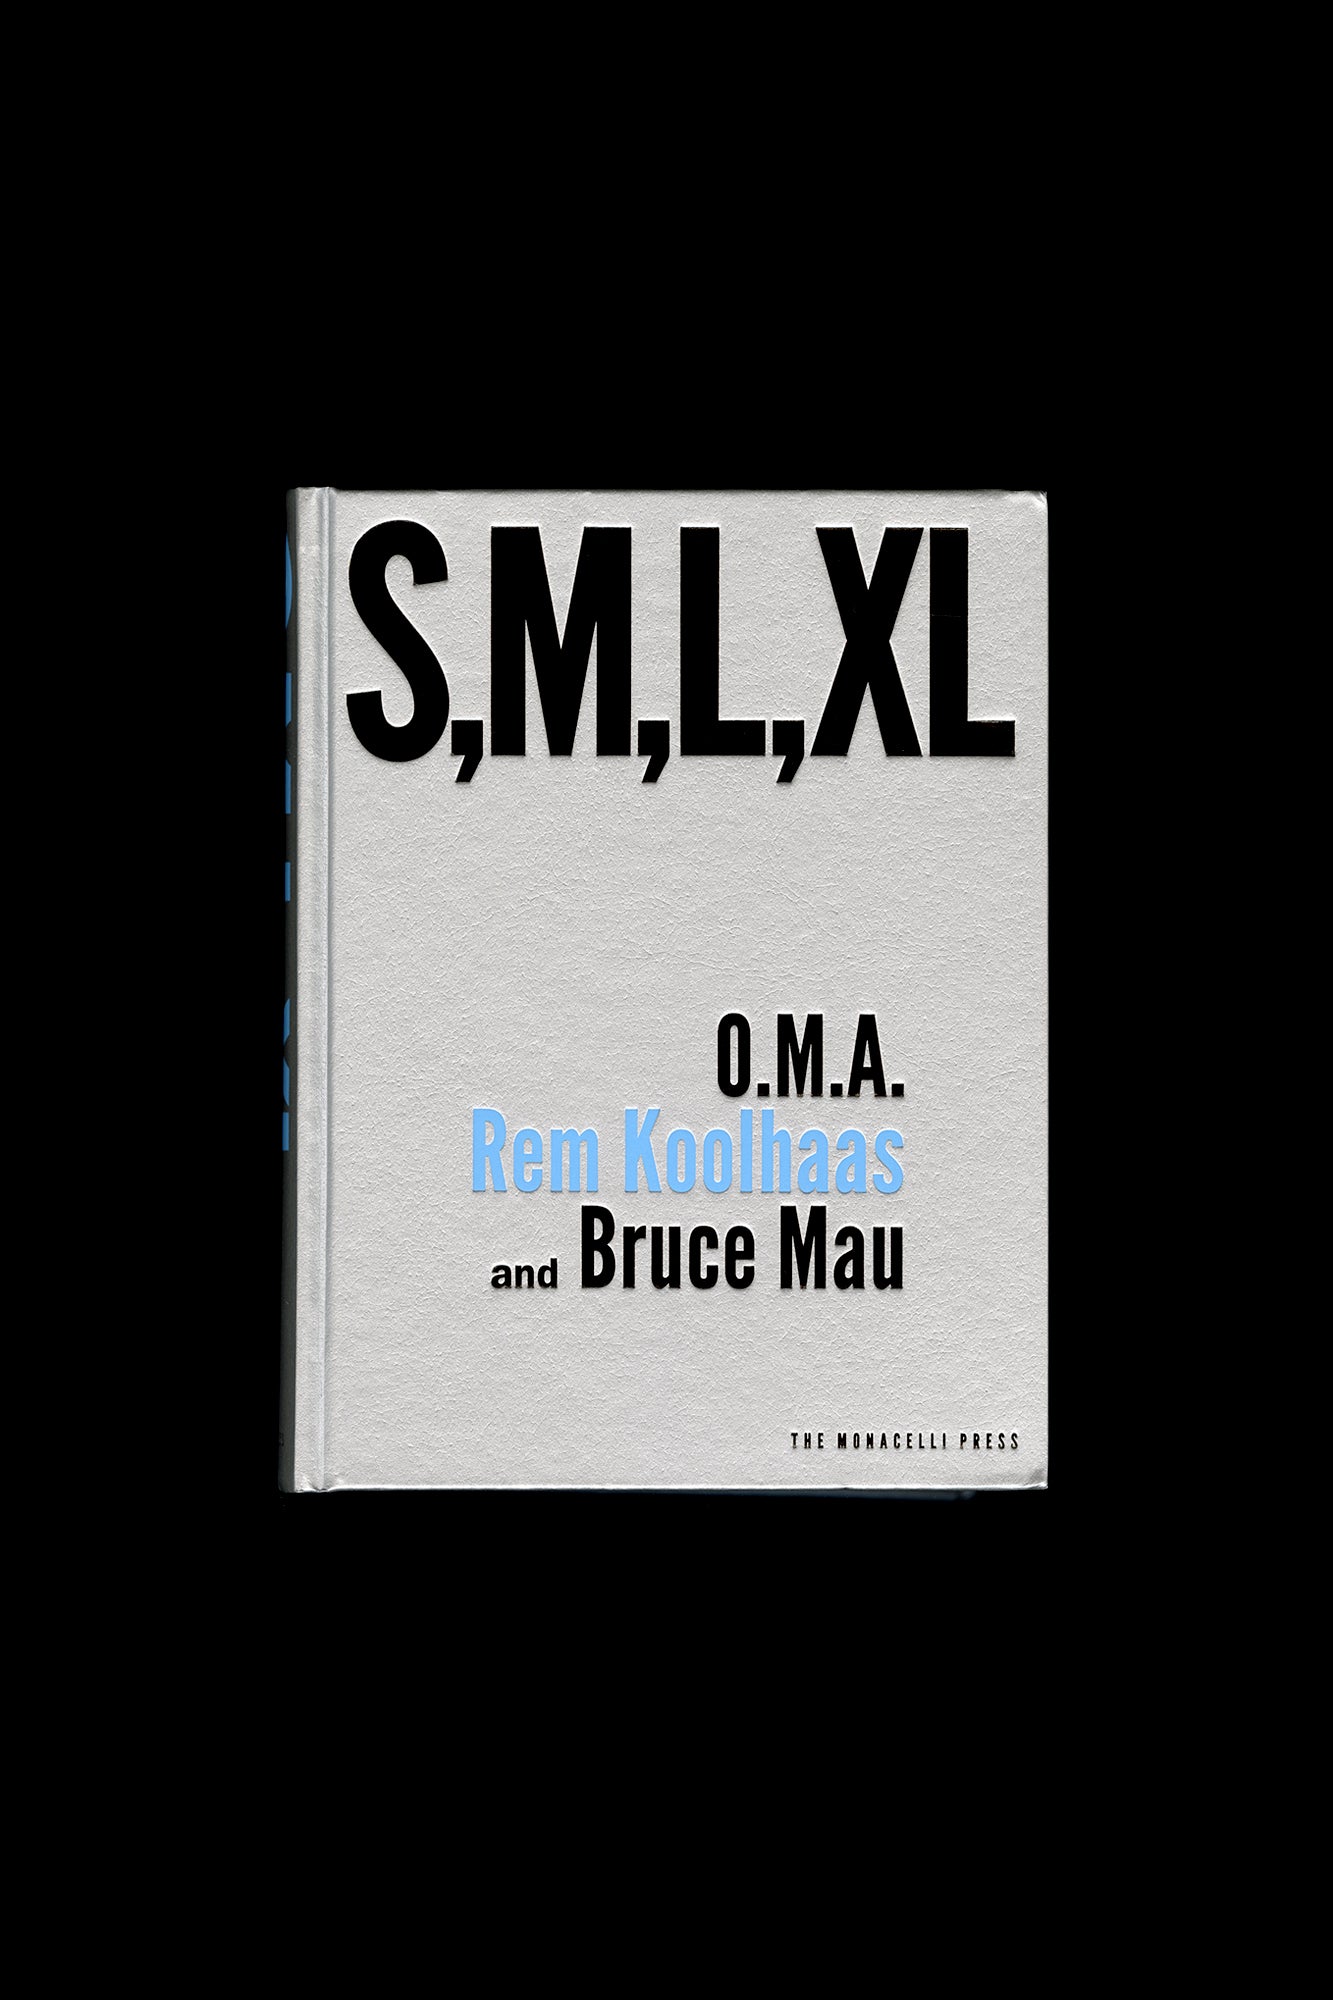 Rem Koolhaas: S,M,L,XL